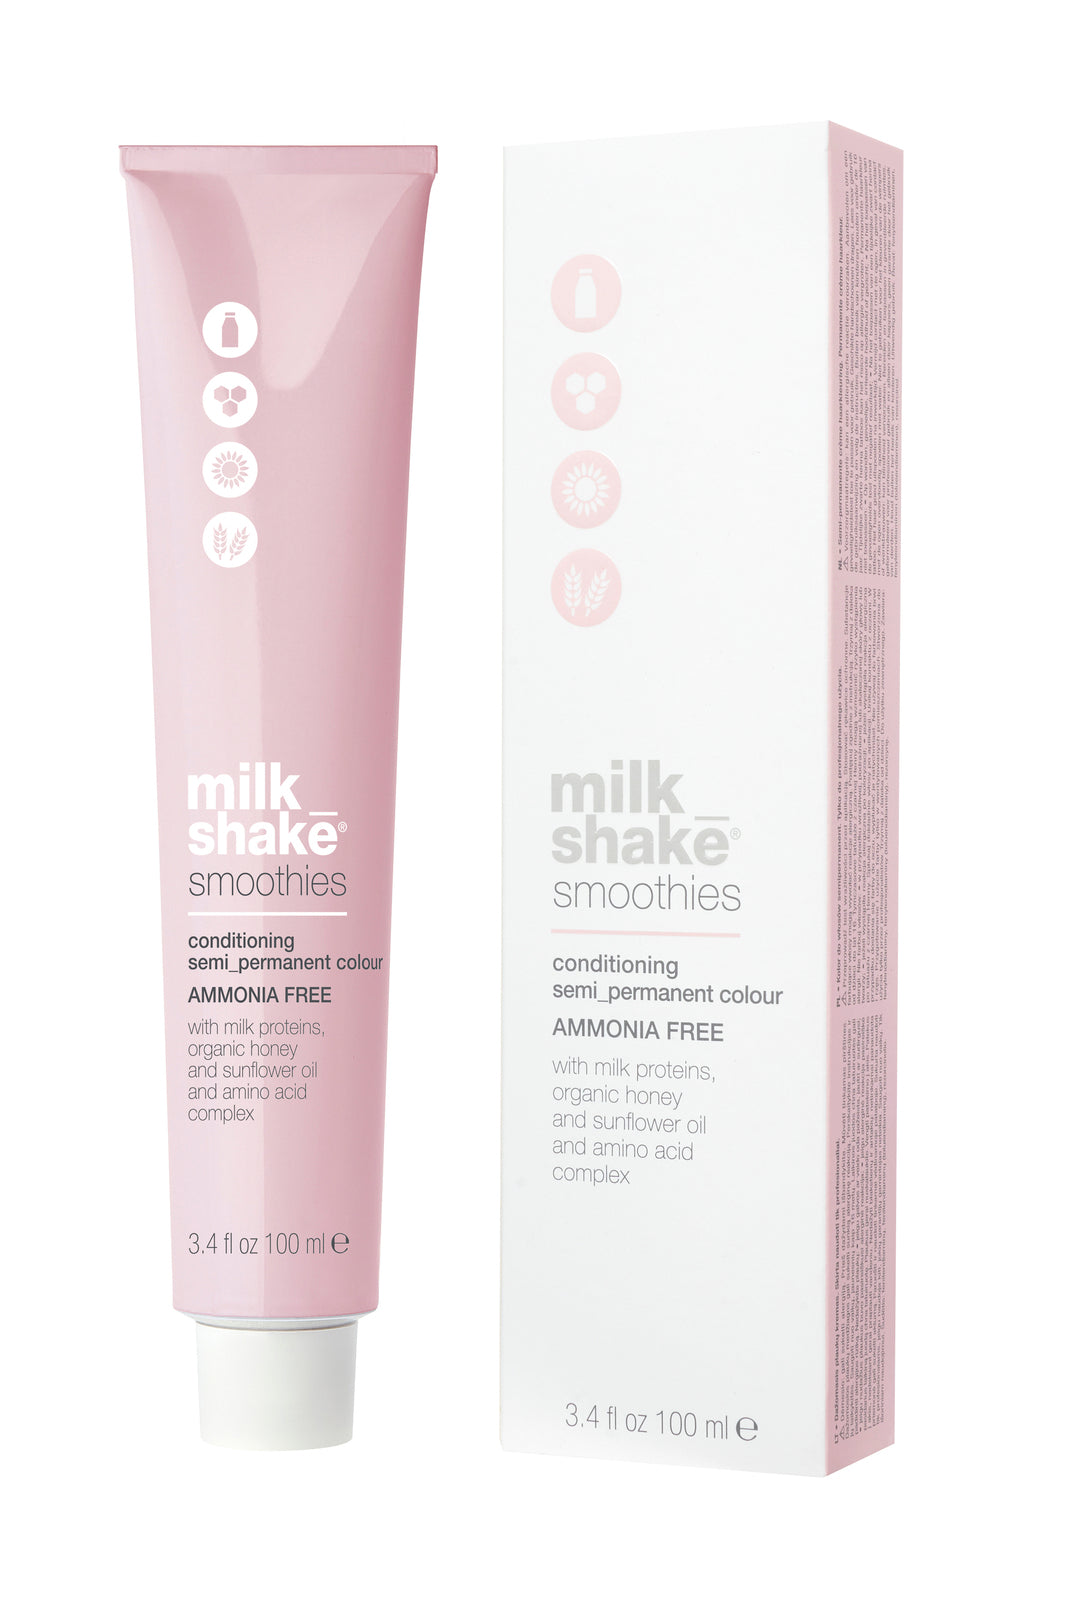 Milkshake smoothies semi-permanent color 9.33